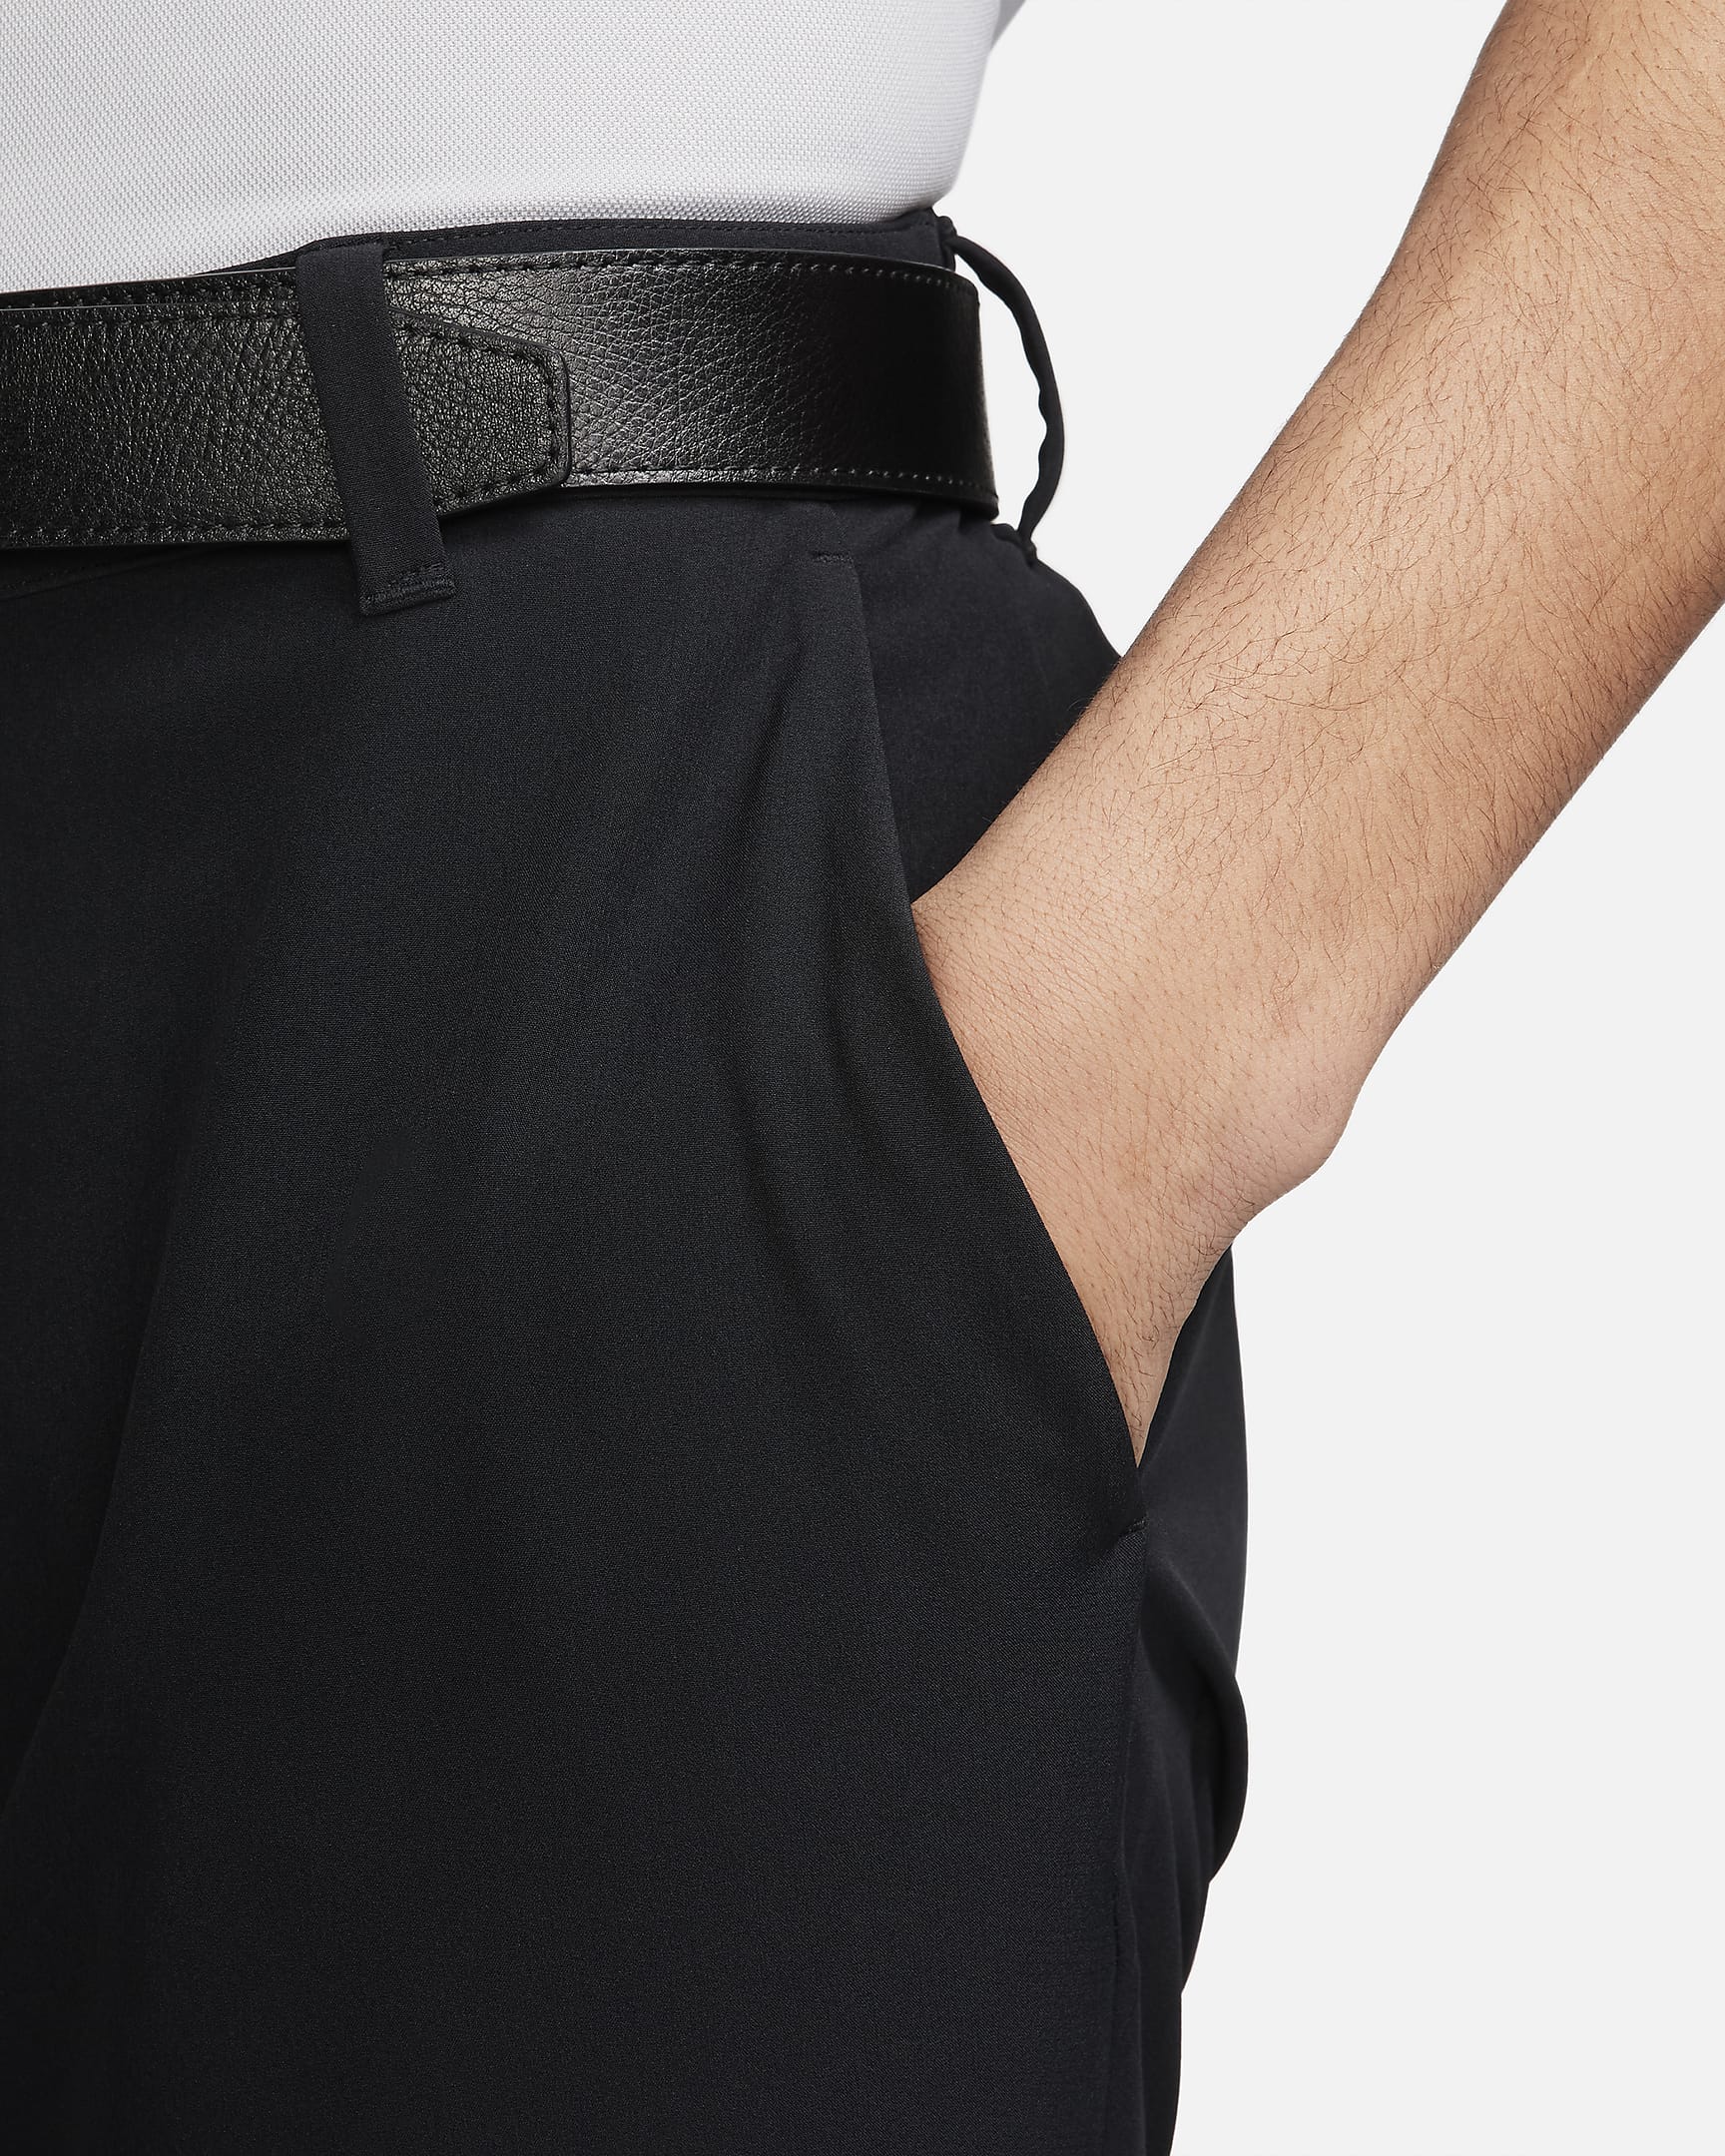 Nike Tour Repel Flex Men's Slim Golf Trousers - Black/Black